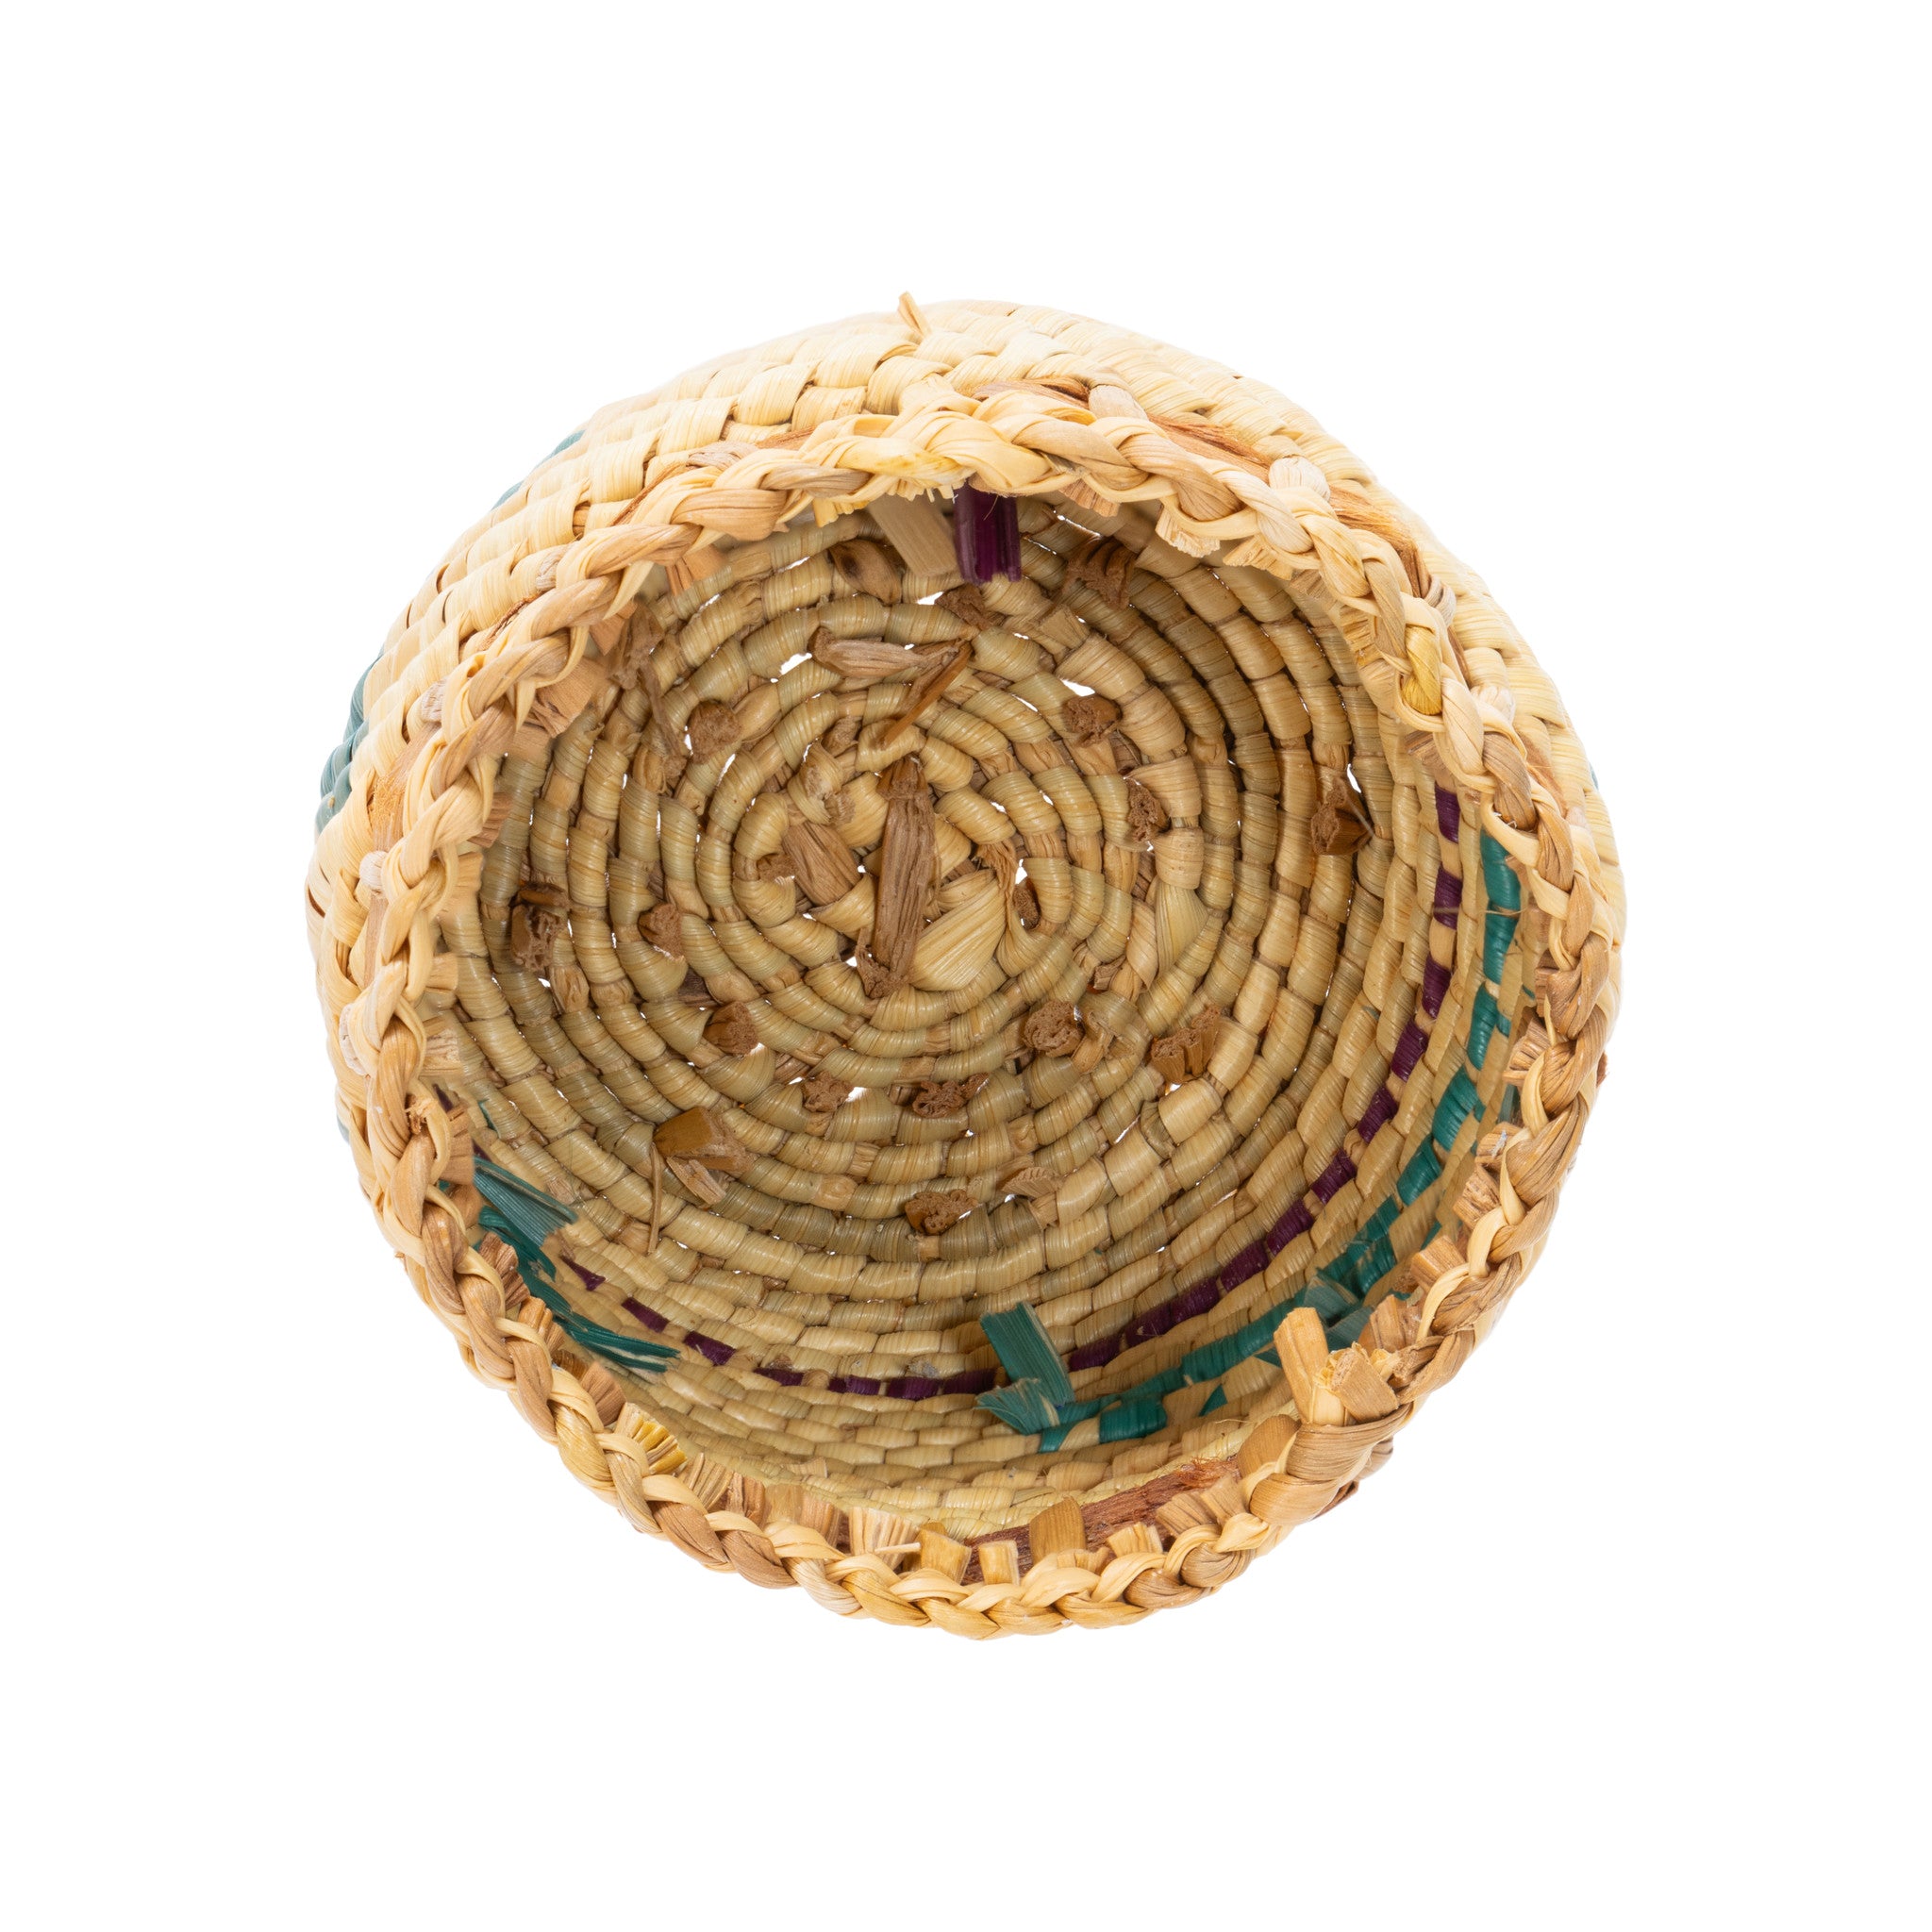 Nootka MiniatureLidded Basket